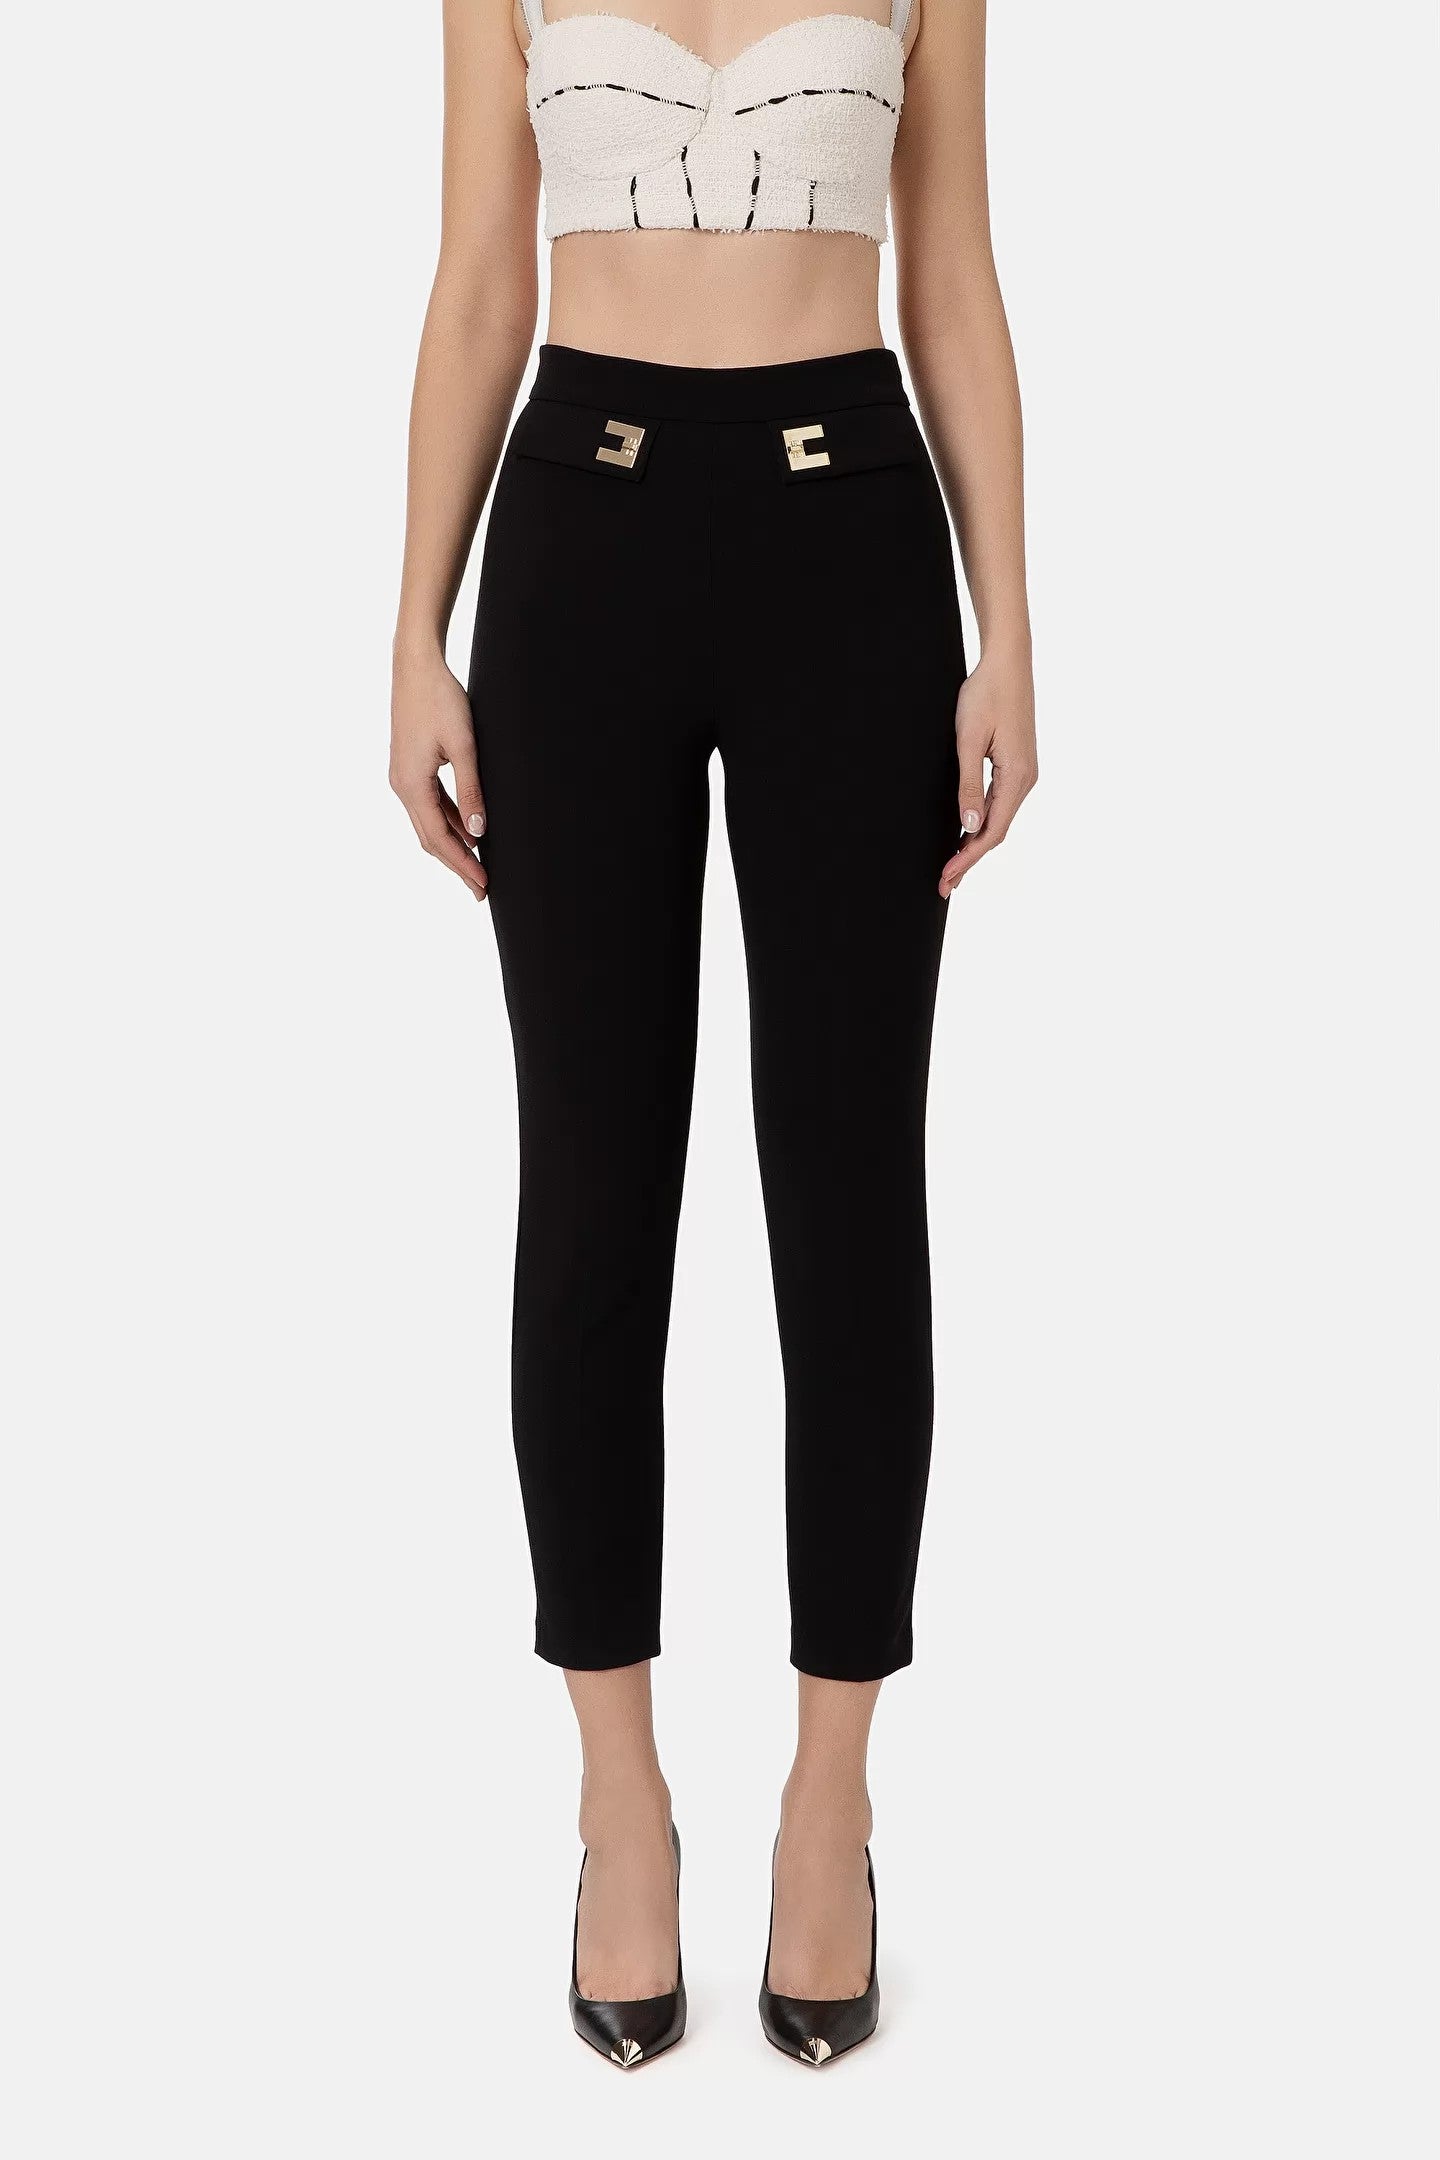 Elisabetta Franchi women's trousers in double stretch crepe Black